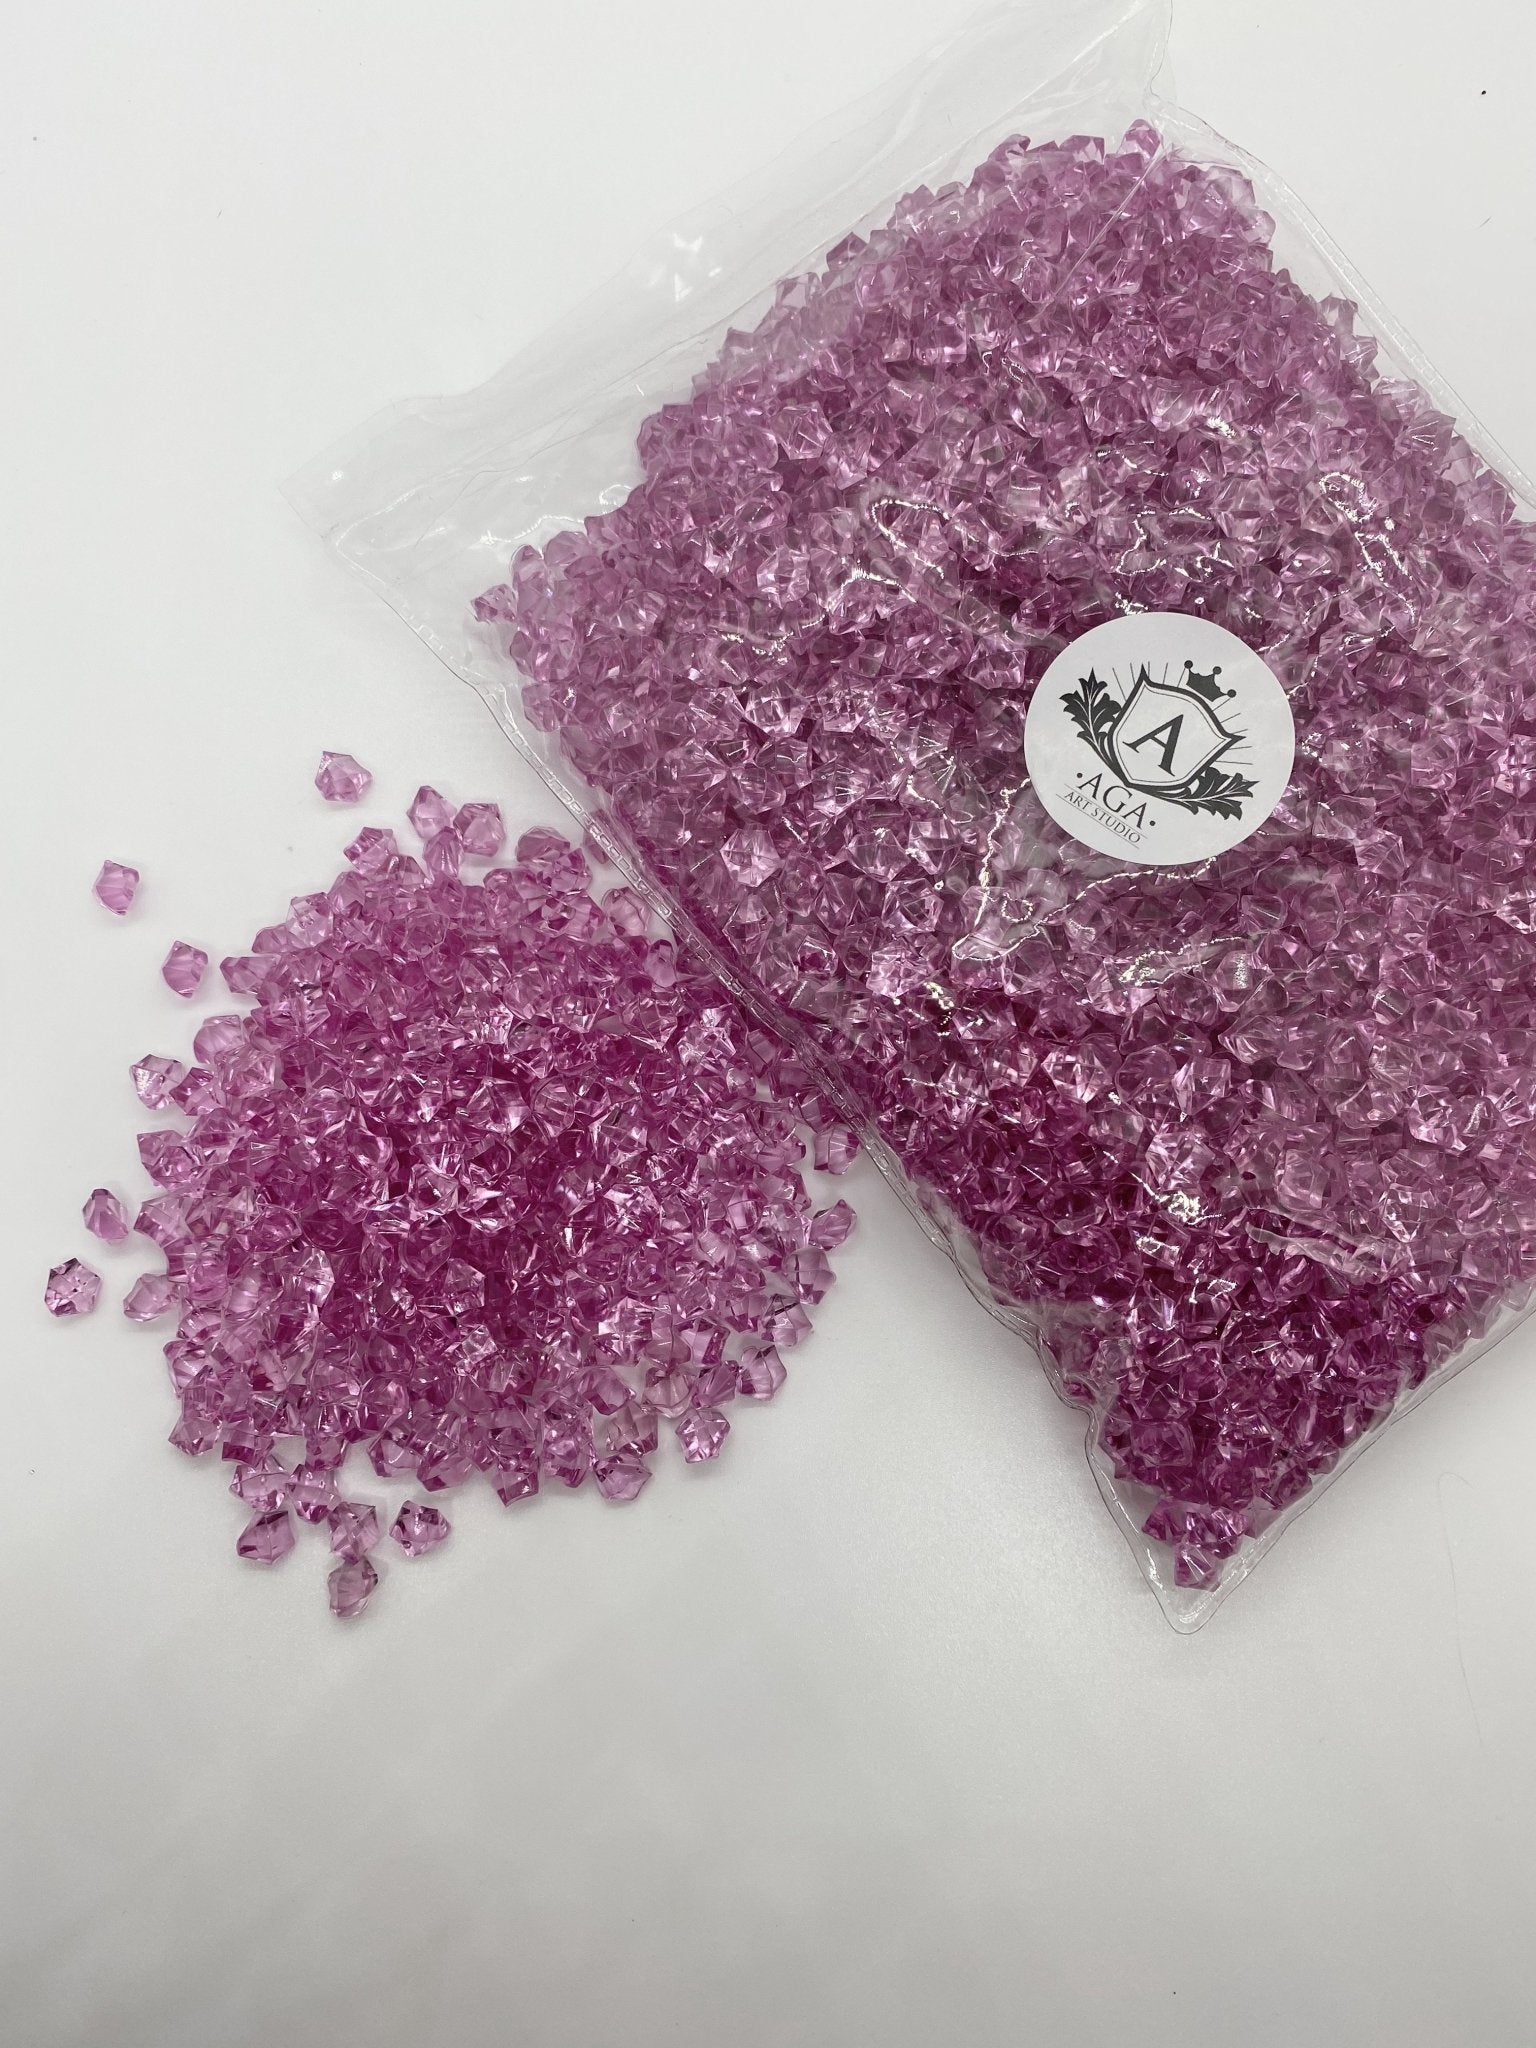 Tiny Acrylic Gems - Purple 1cm - AGA Art Studio